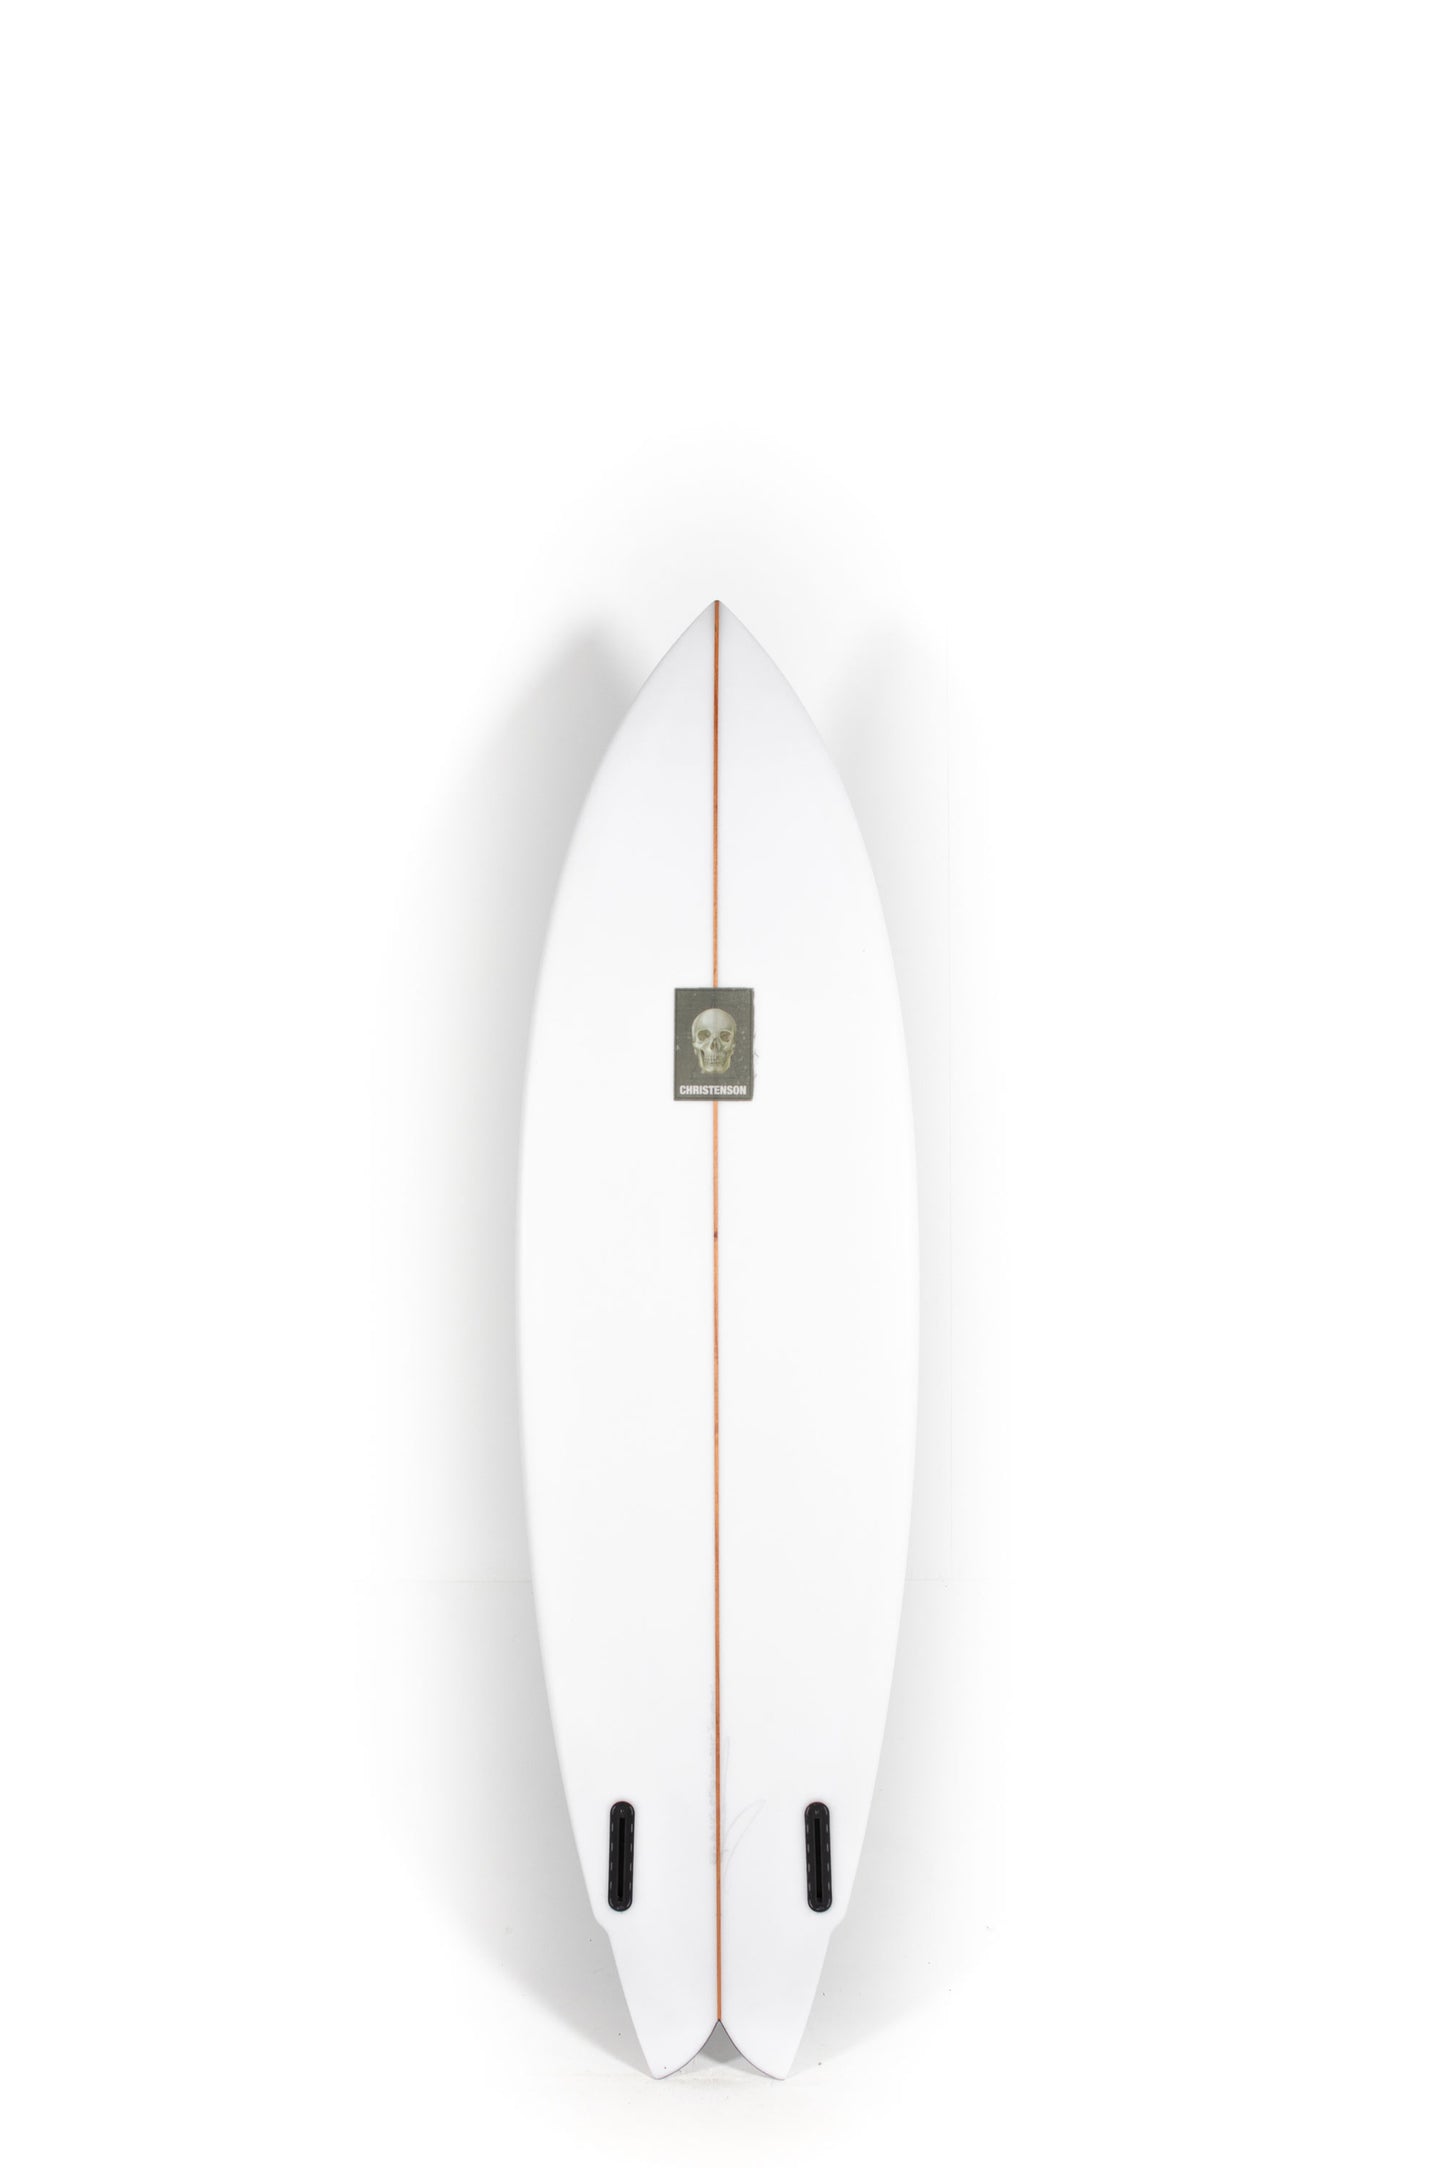 Pukas Surf Shop - Christenson Surfboard  - WOLVERINE by Chris Christenson - 6’6 20 3/4 x 2 5/8